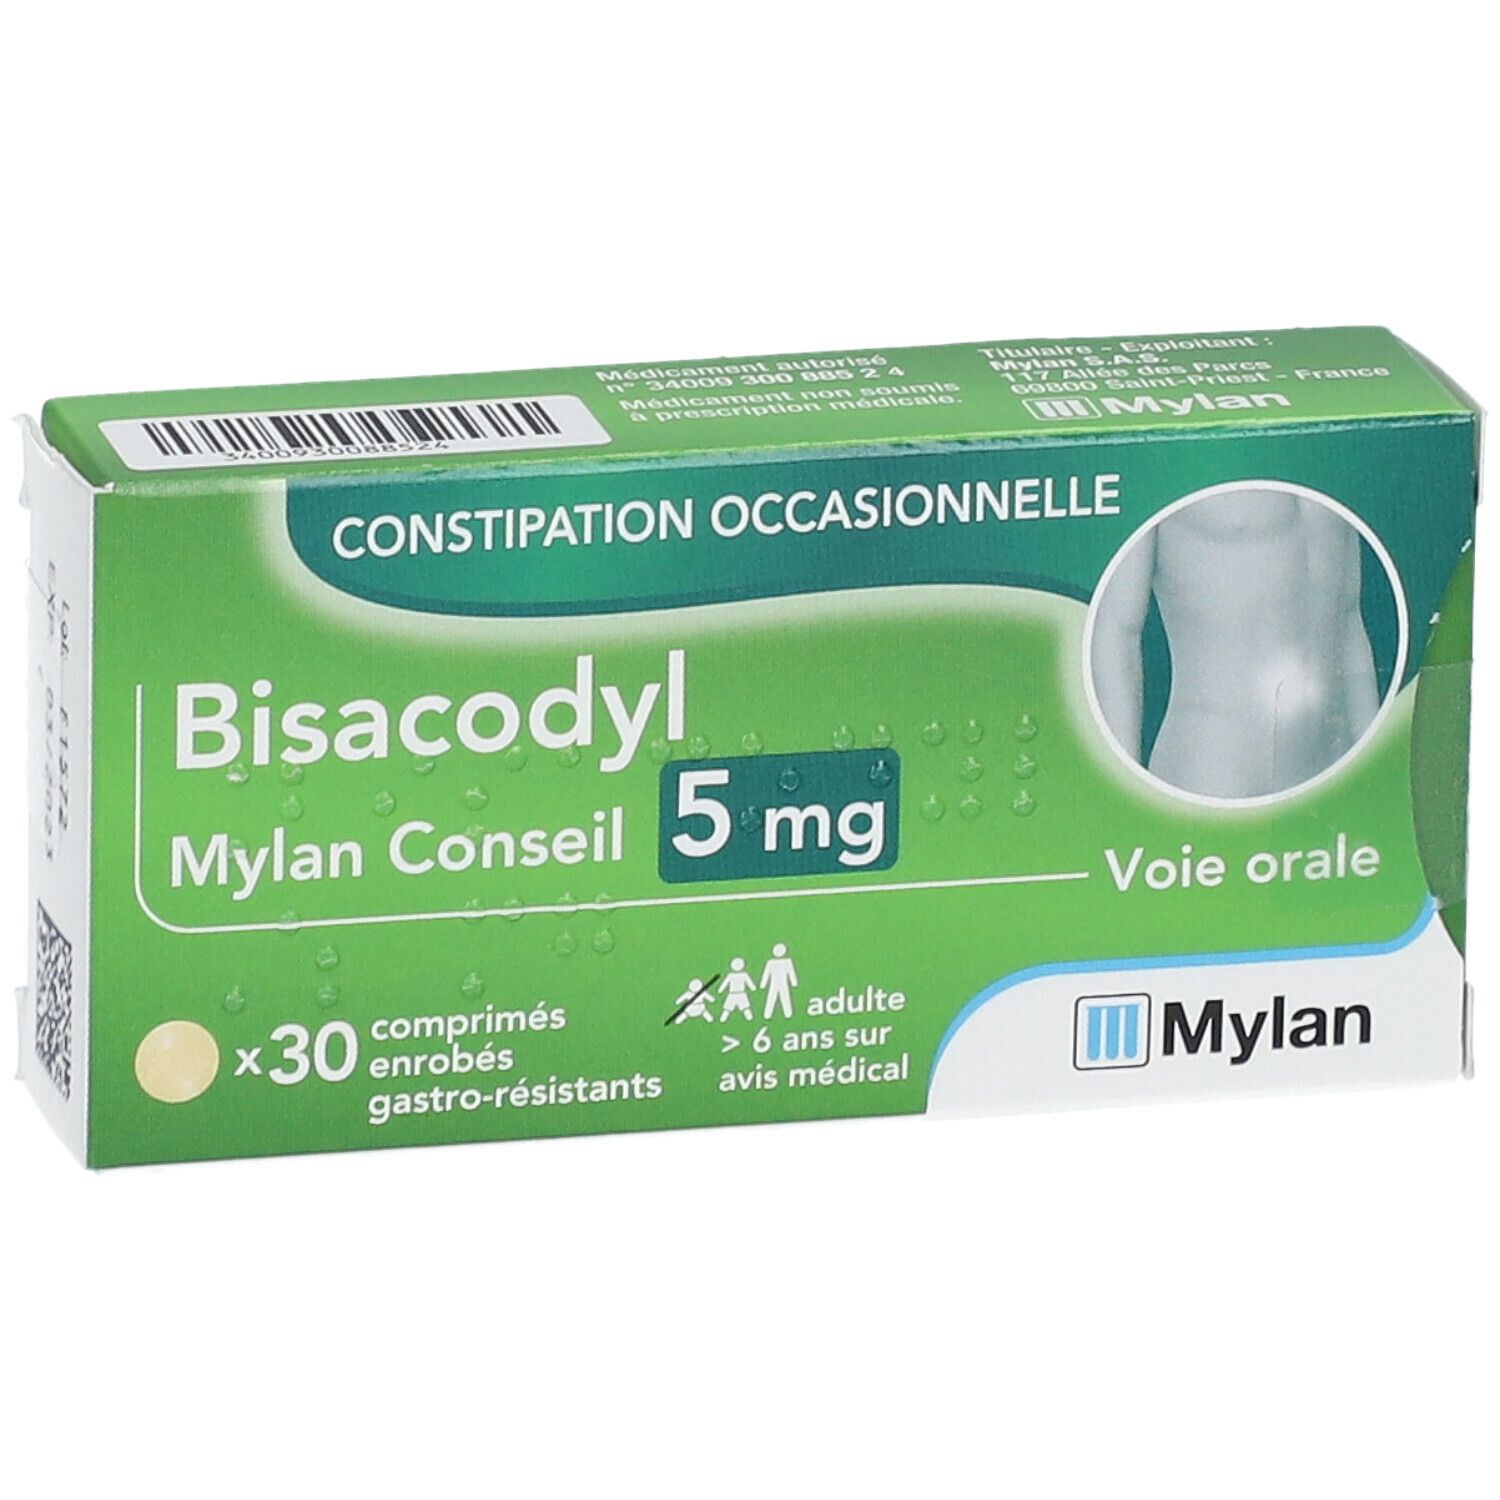 Bisacodyl 5 mg Mylan - 30 comprimés enrobés